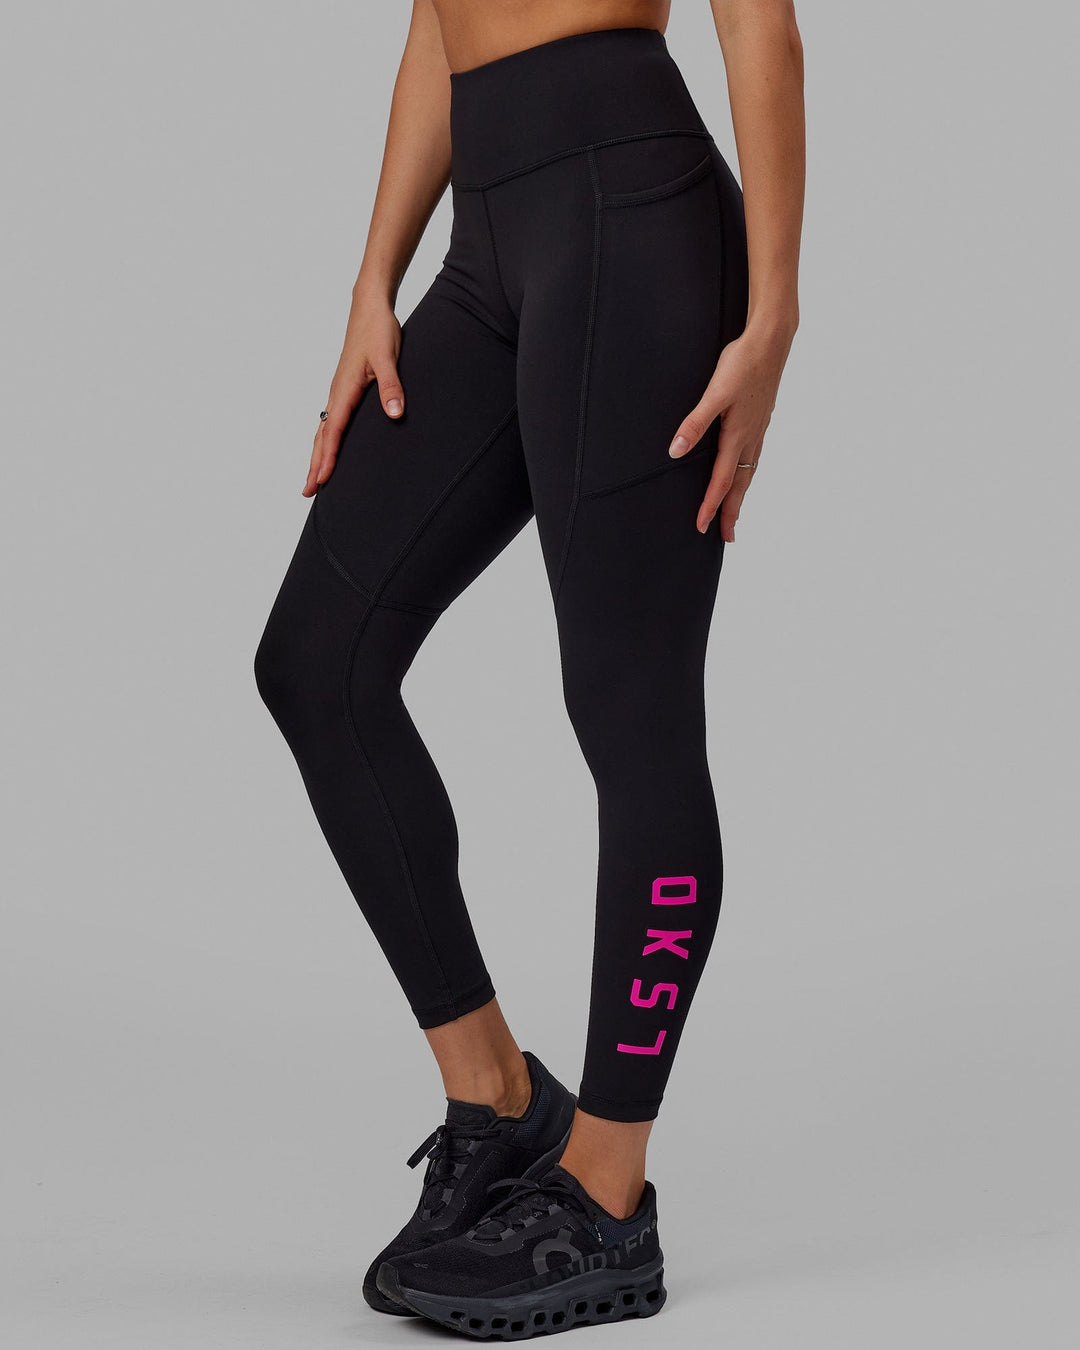 Repwear Fitness Lux 7/8 Leggings Black